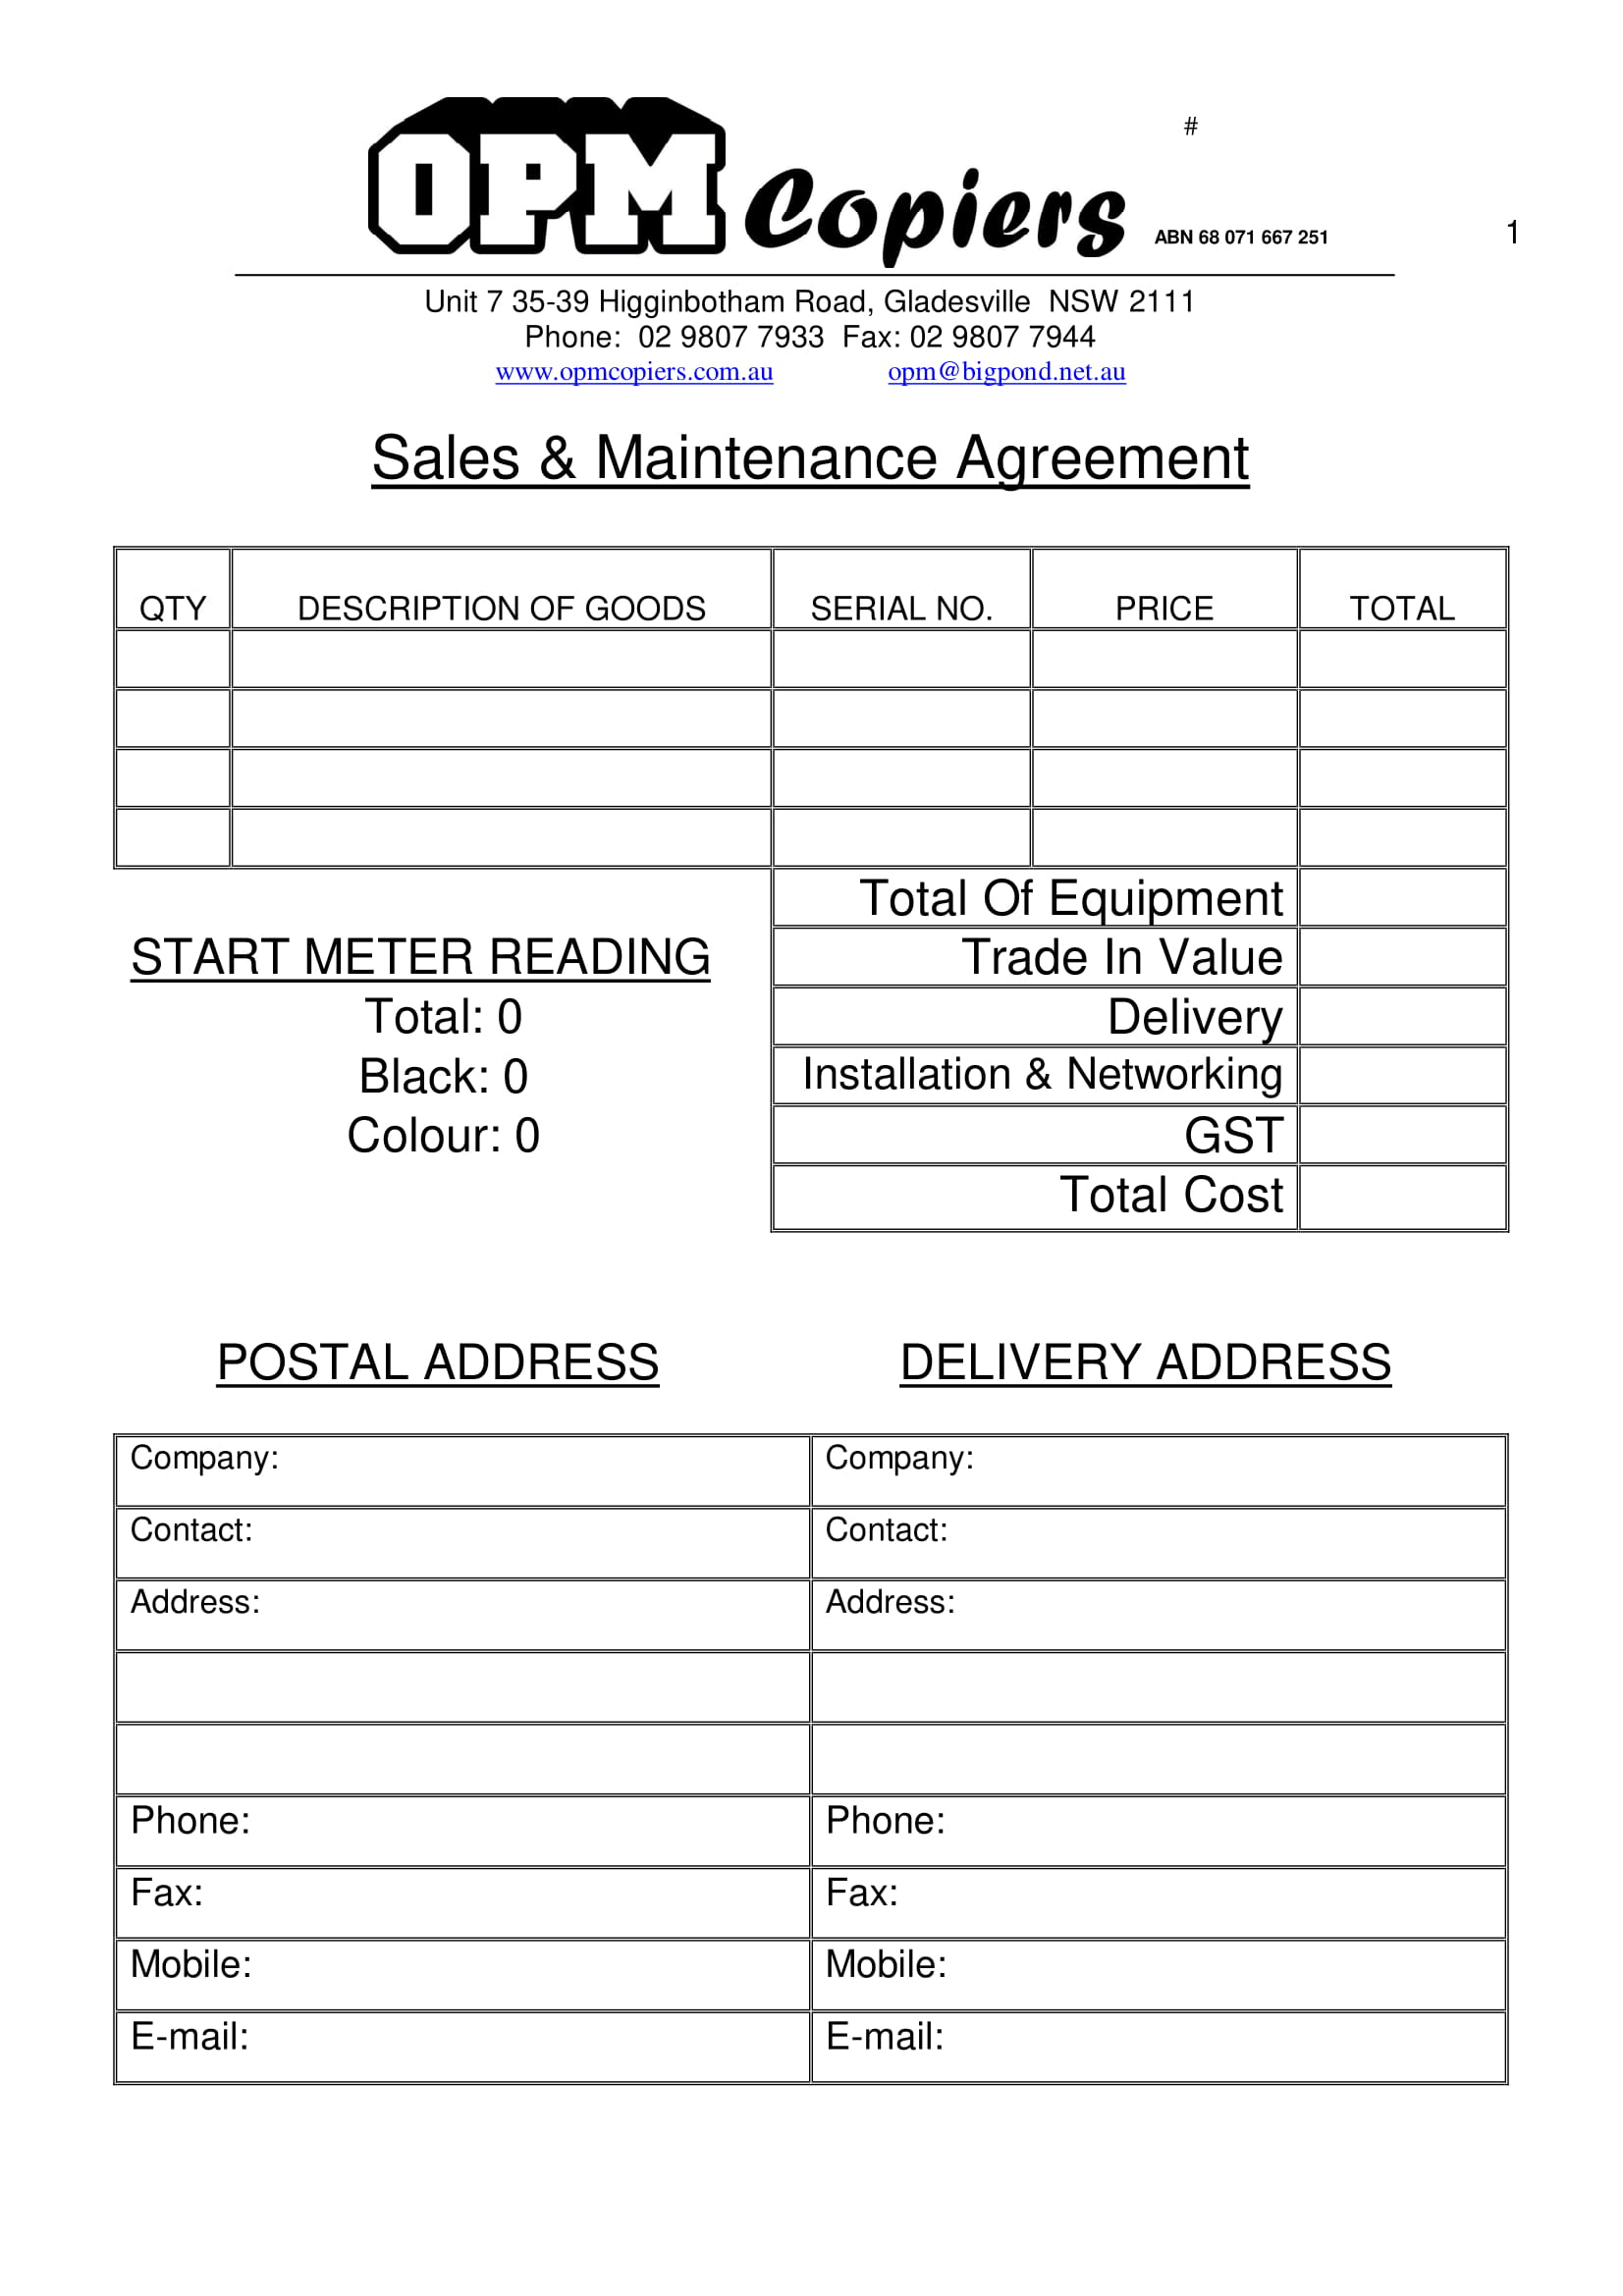 sales & maintenance agreement